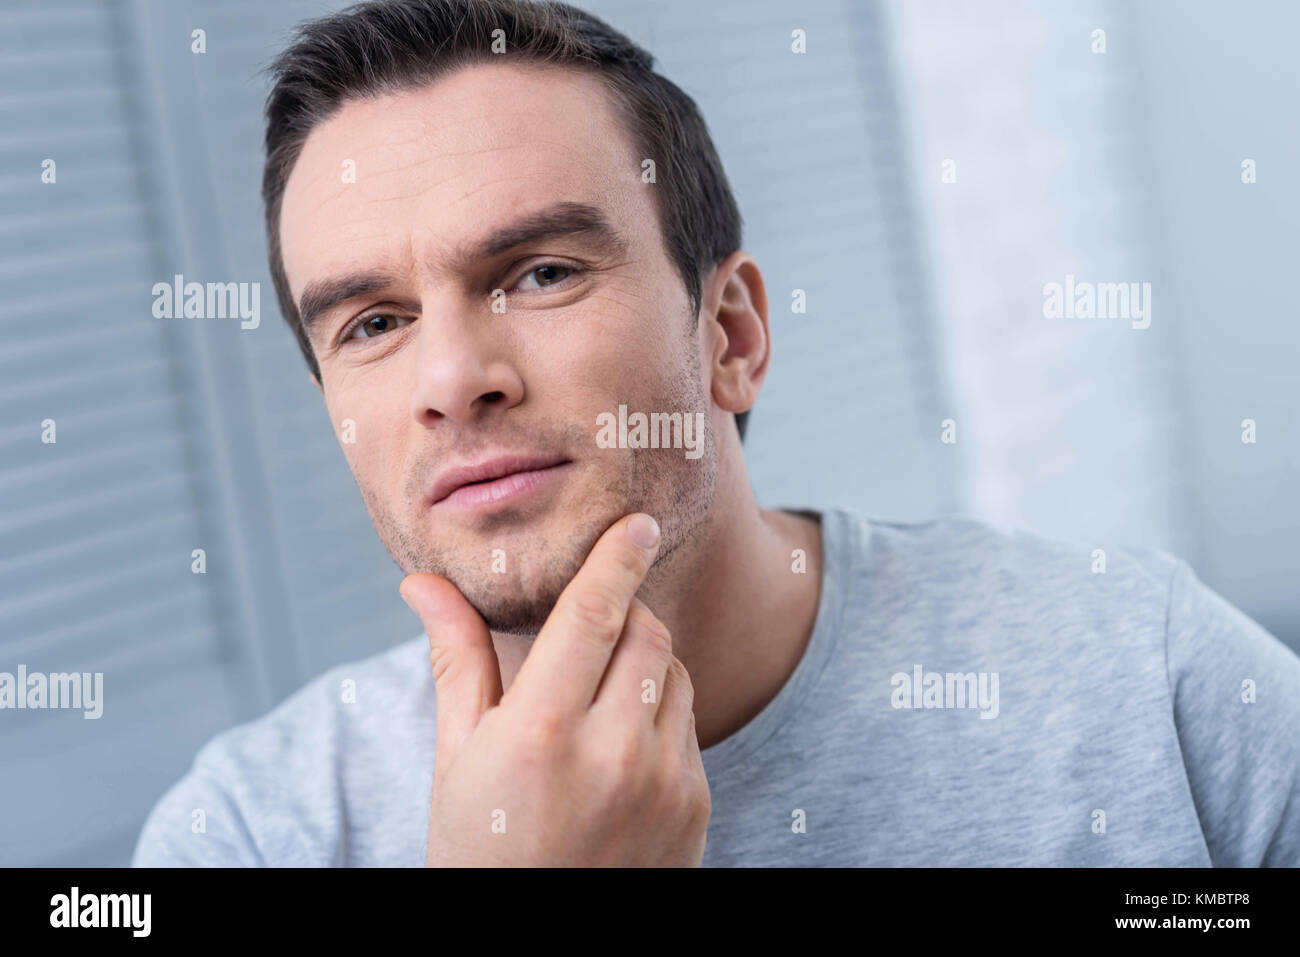 Thoughtful earnest man admiring his bristles Stock Photo